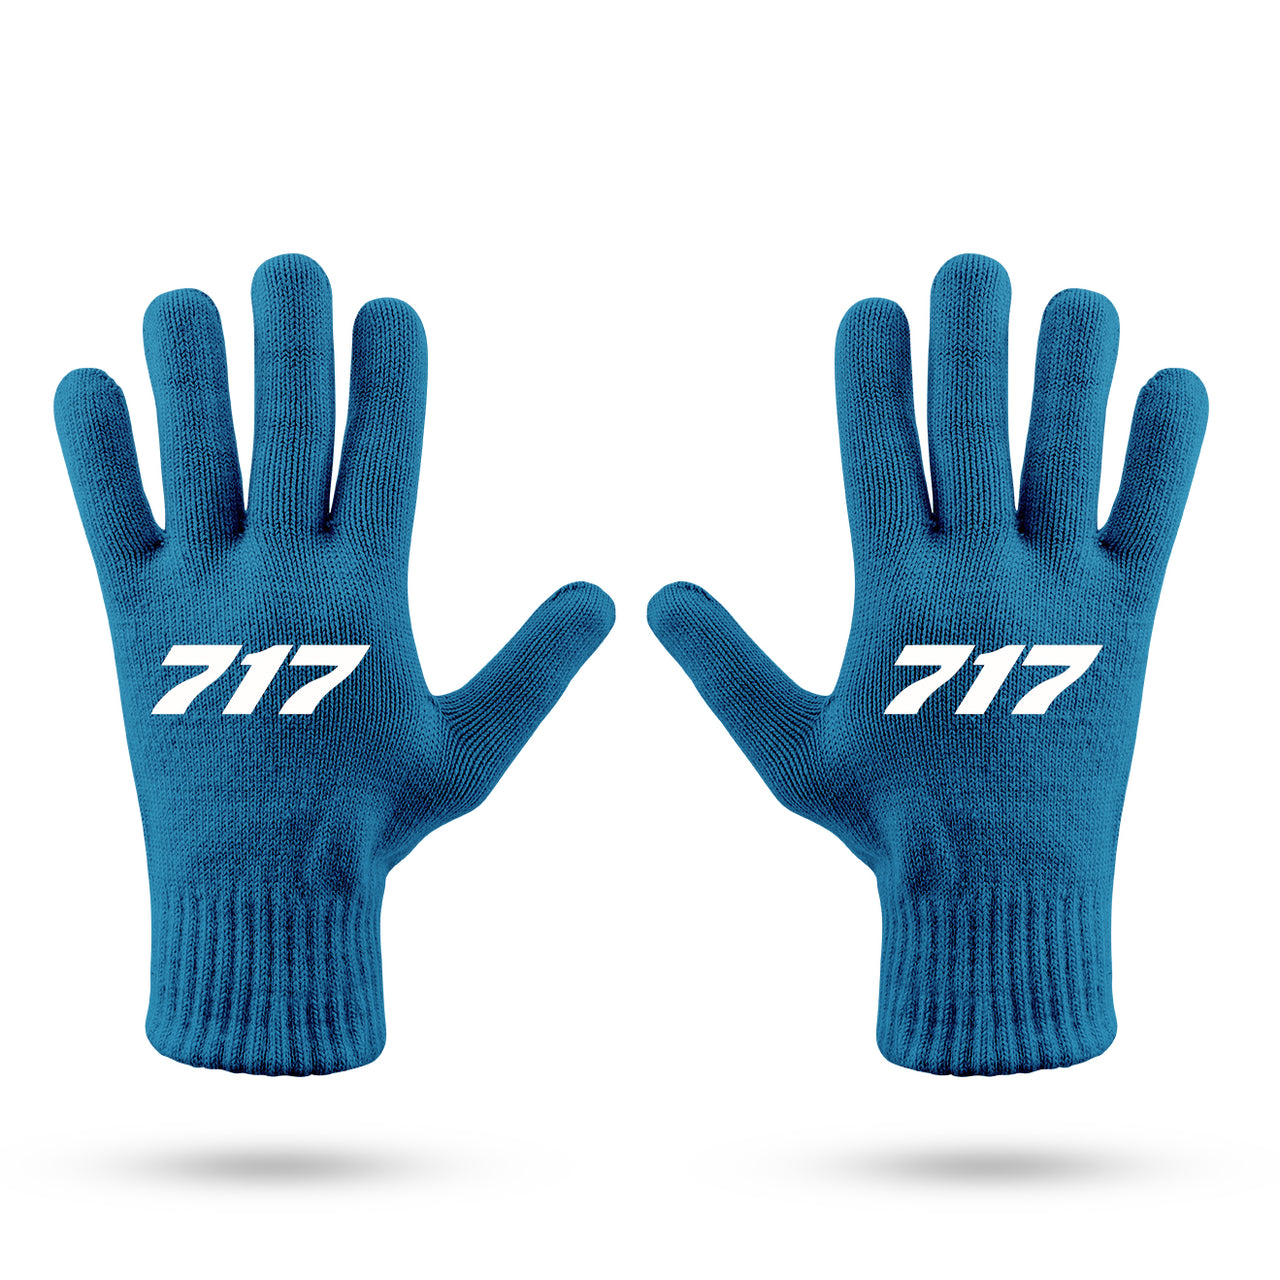 717 Flat Text Designed Gloves